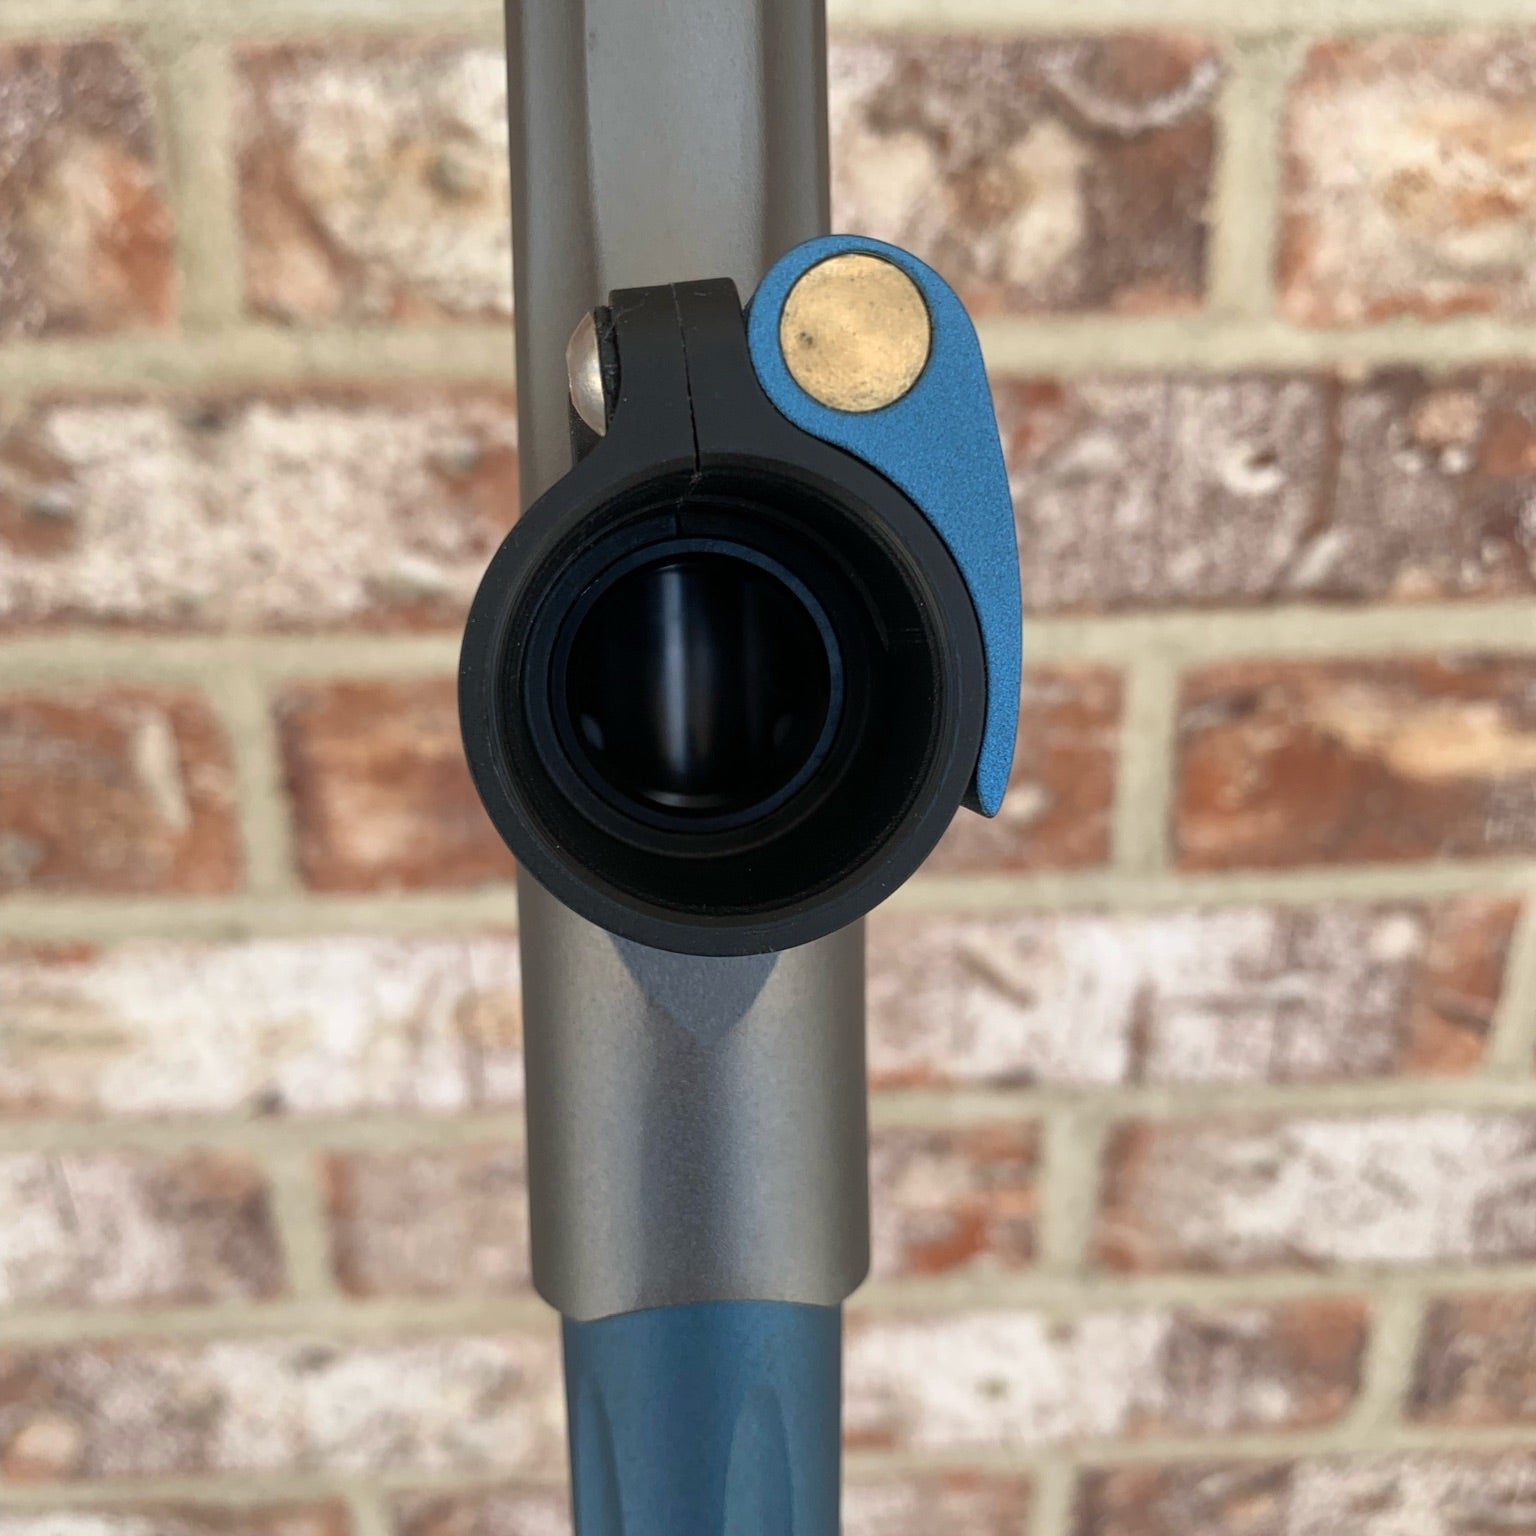 Used Empire Mini GS Paintball Gun - Grey/Blue